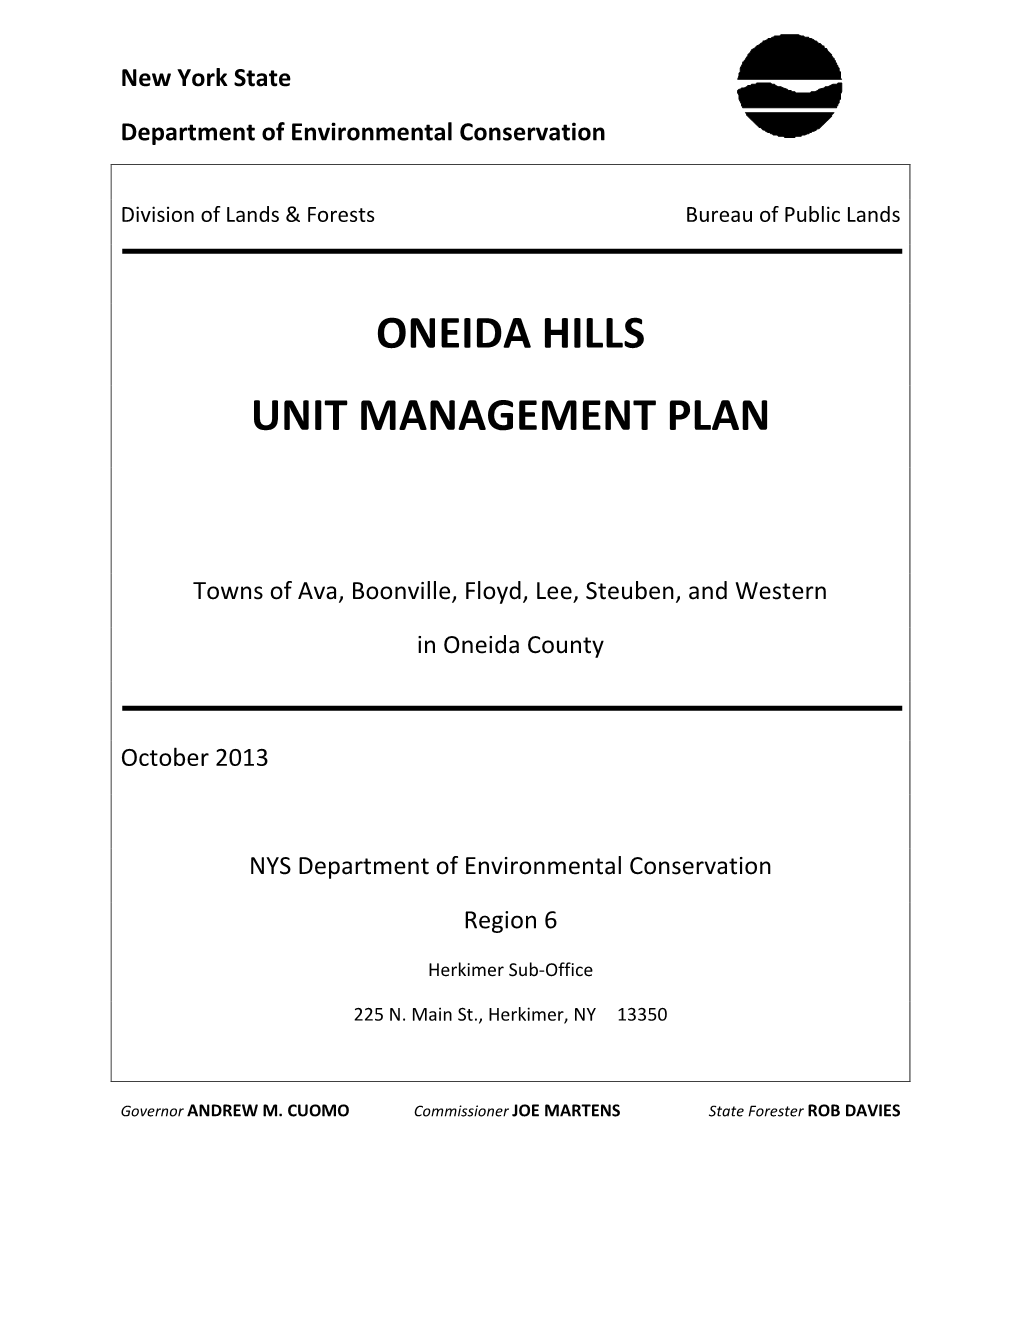 Oneida Hills Unit Management Plan